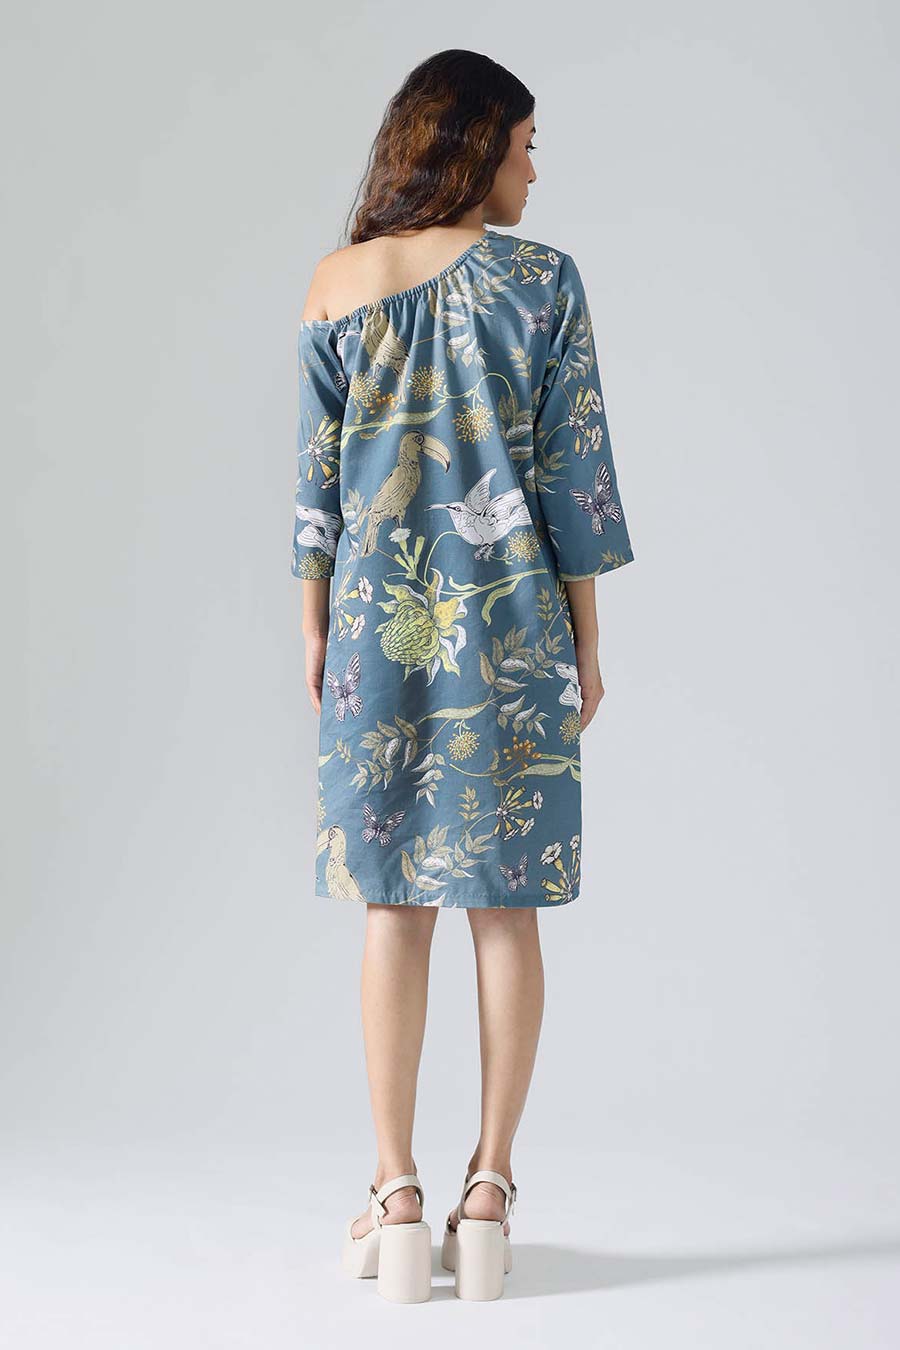 Teal Printed Toucan Dress